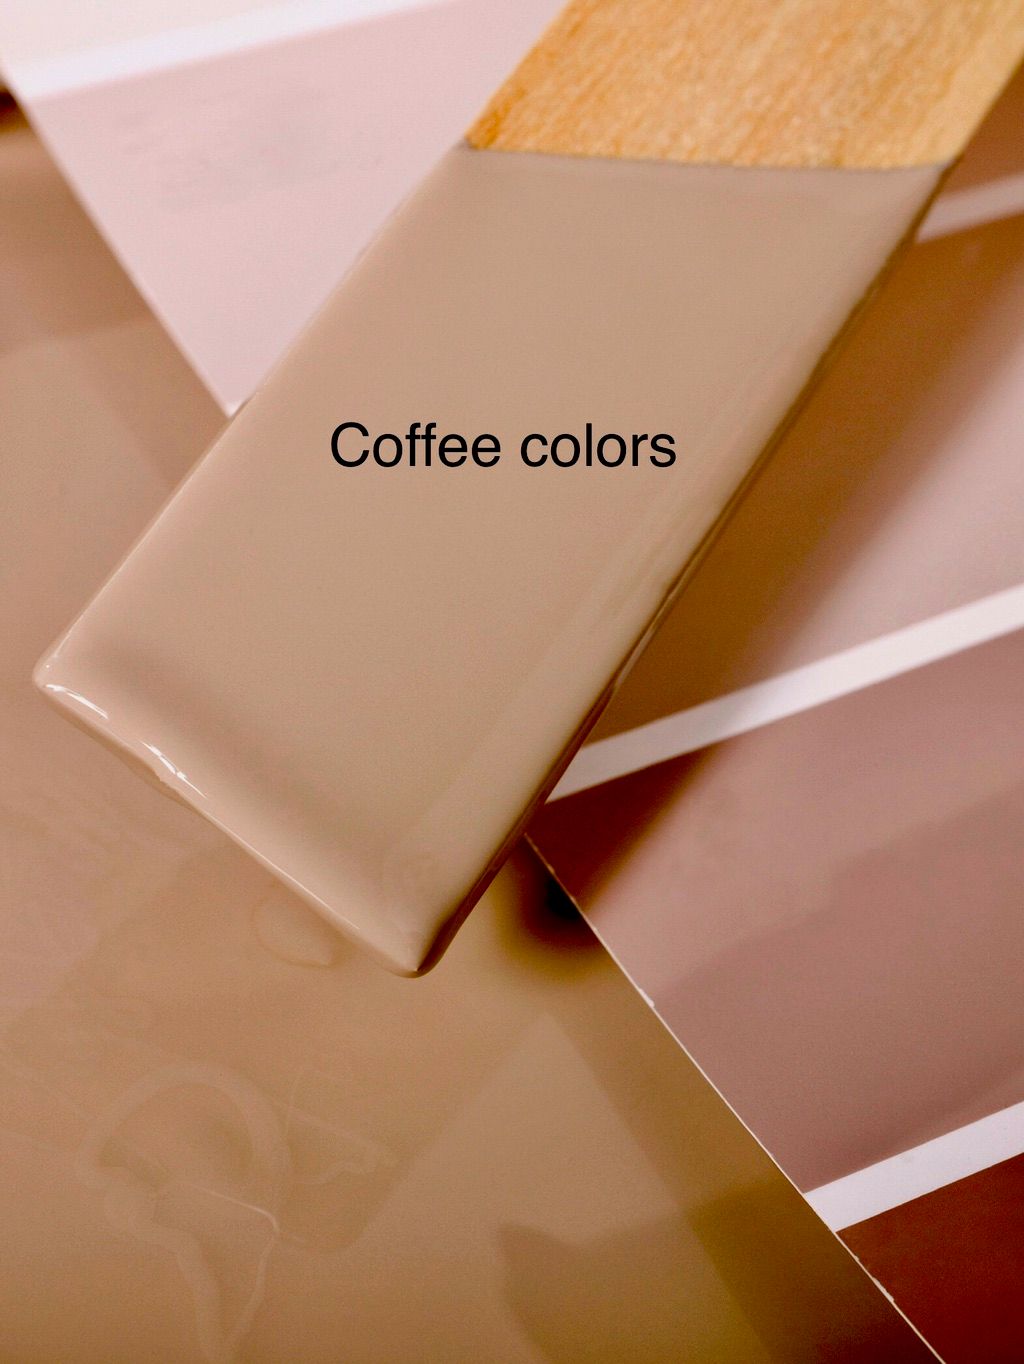 Coffe colors